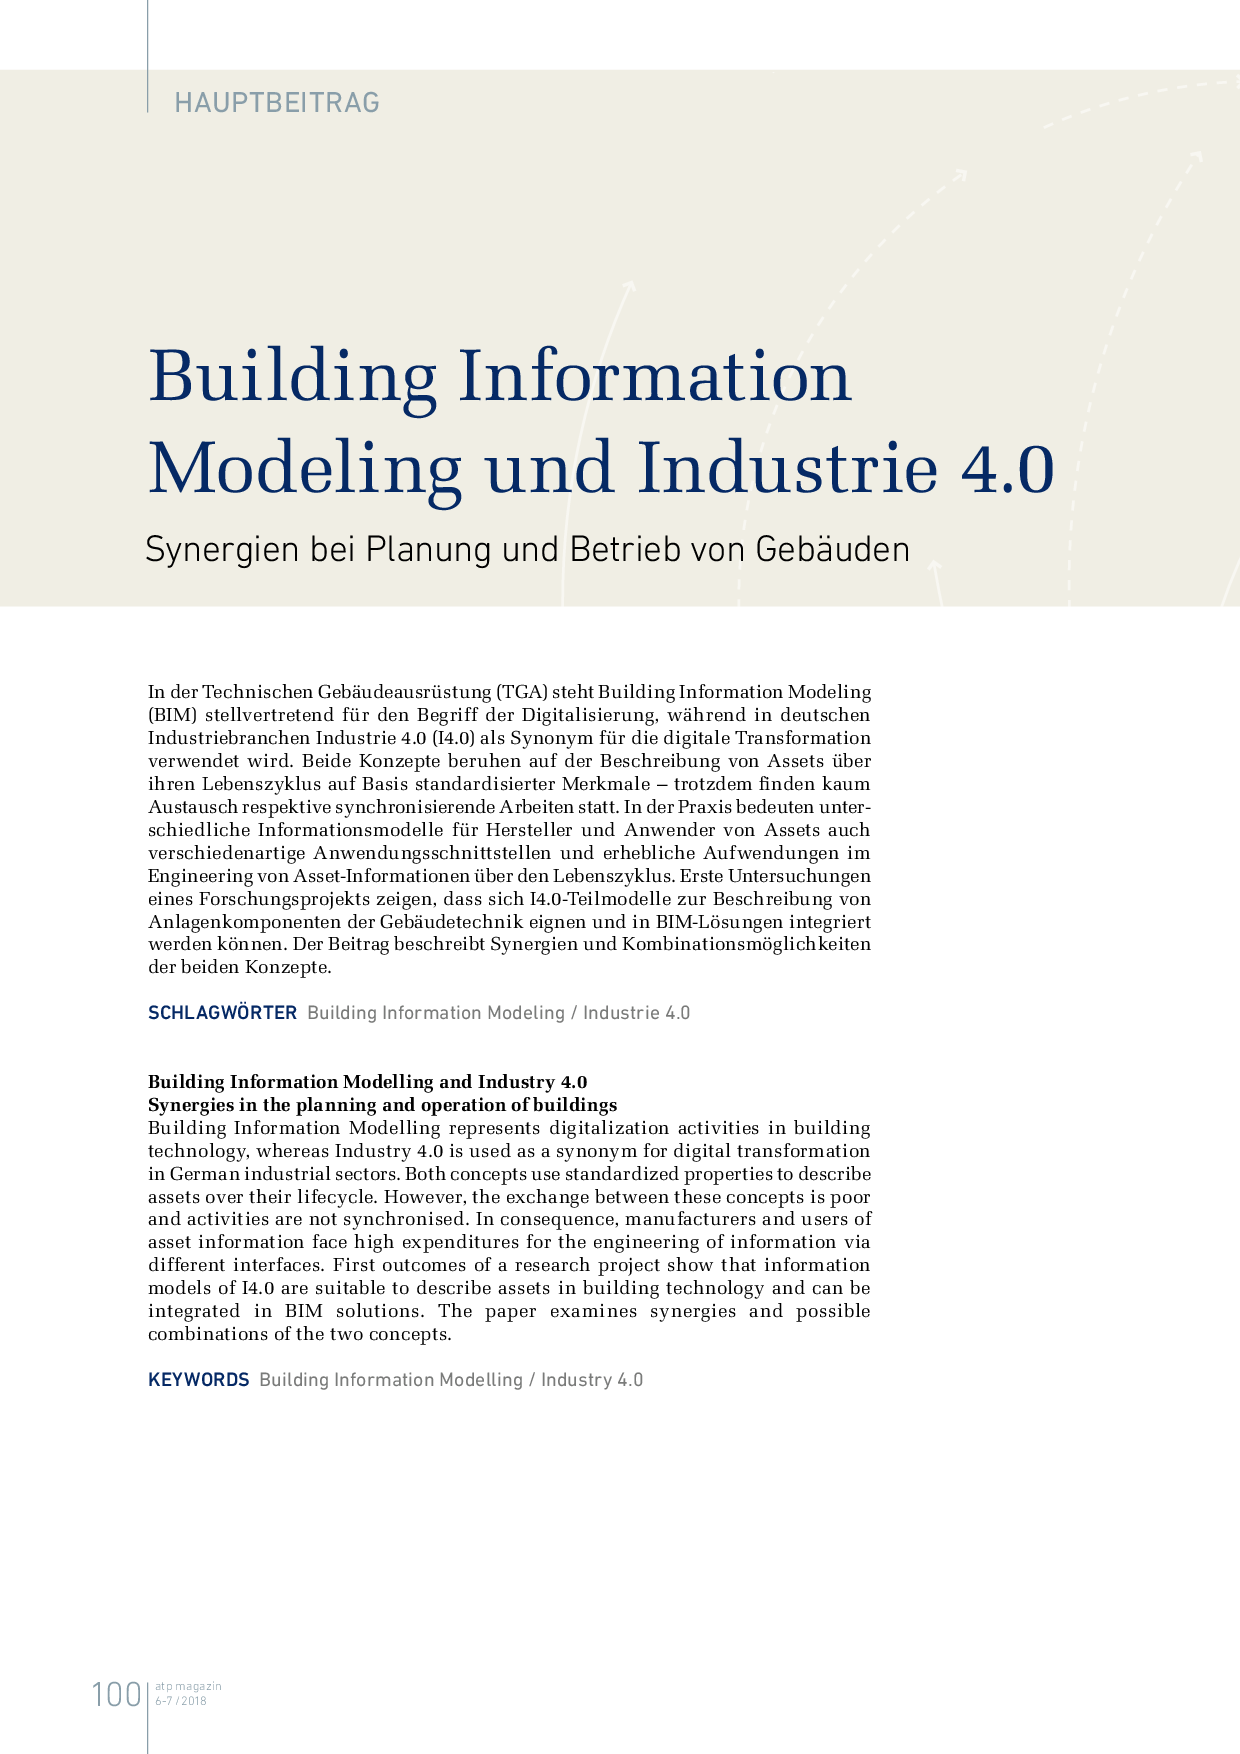 Building Information Modeling und Industrie 4.0